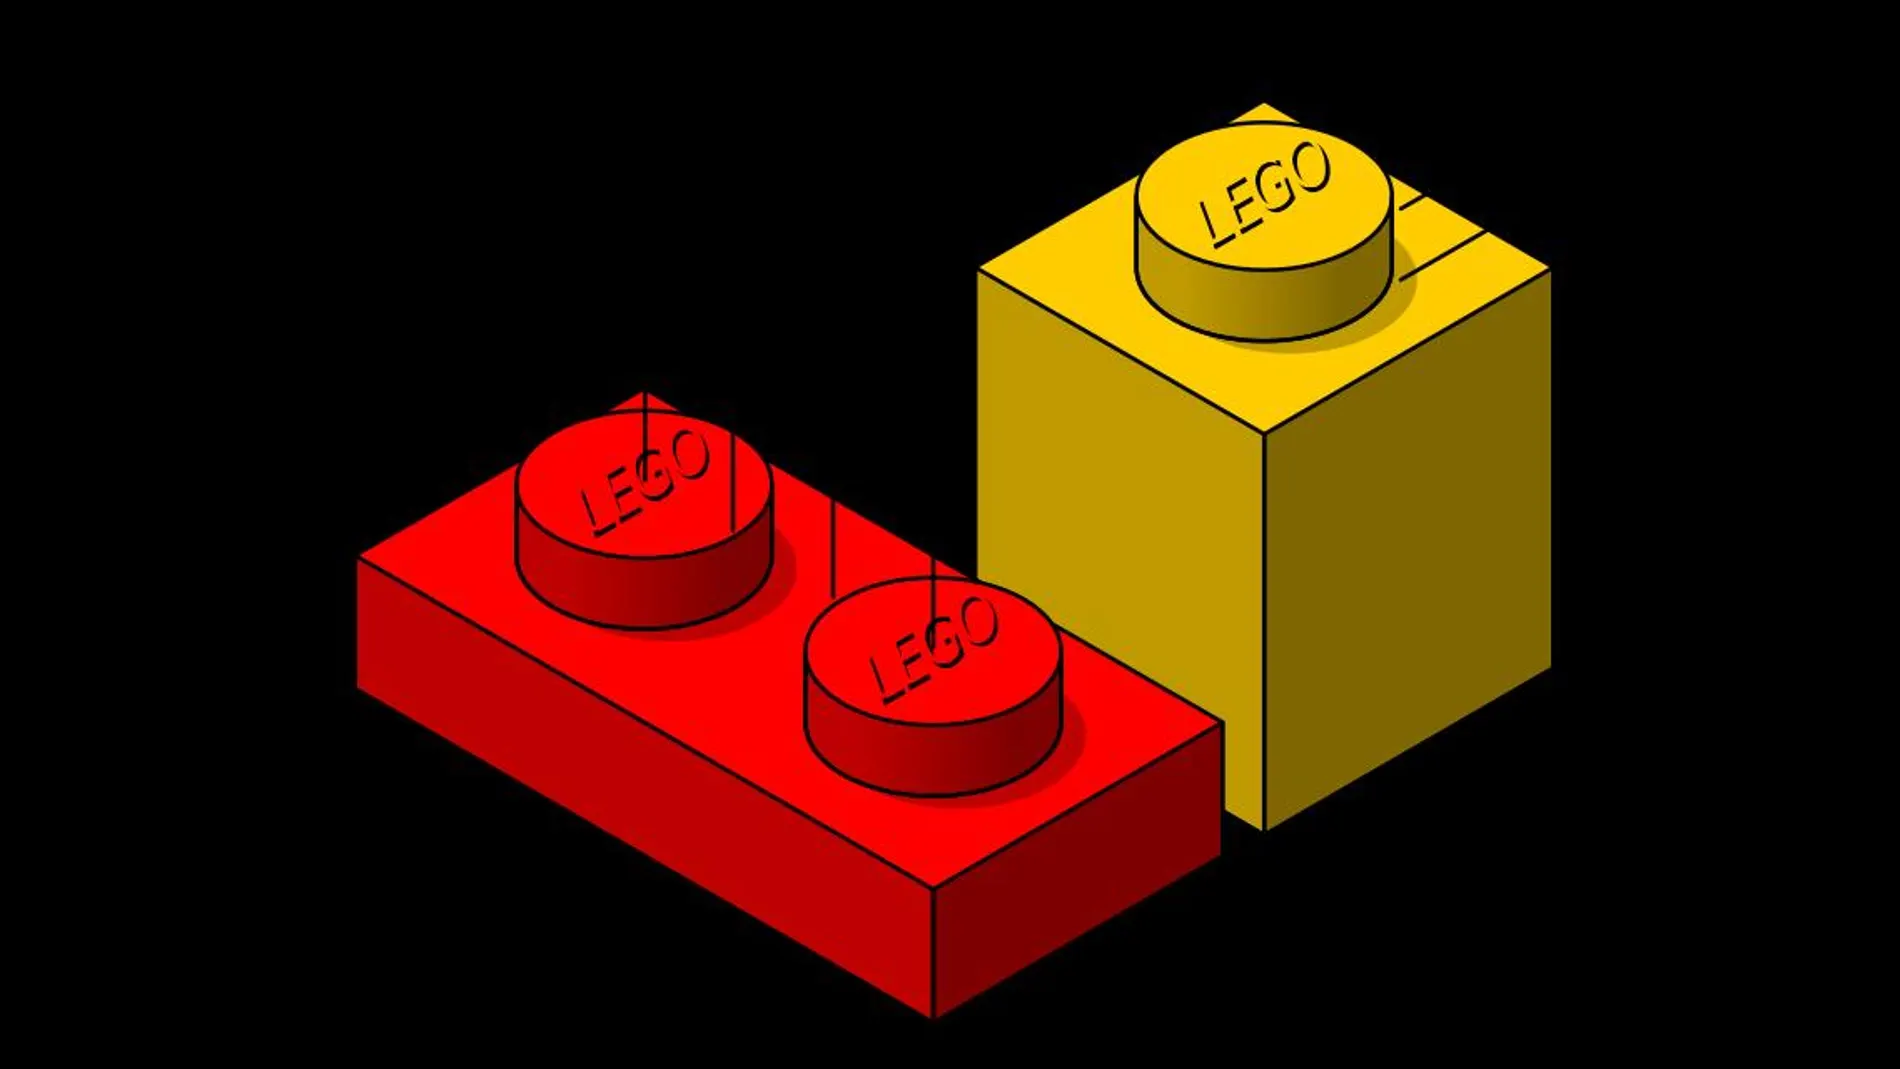 El sistema de enganche de los bloques de construcción de LEGO revolucionó el sector del juguete